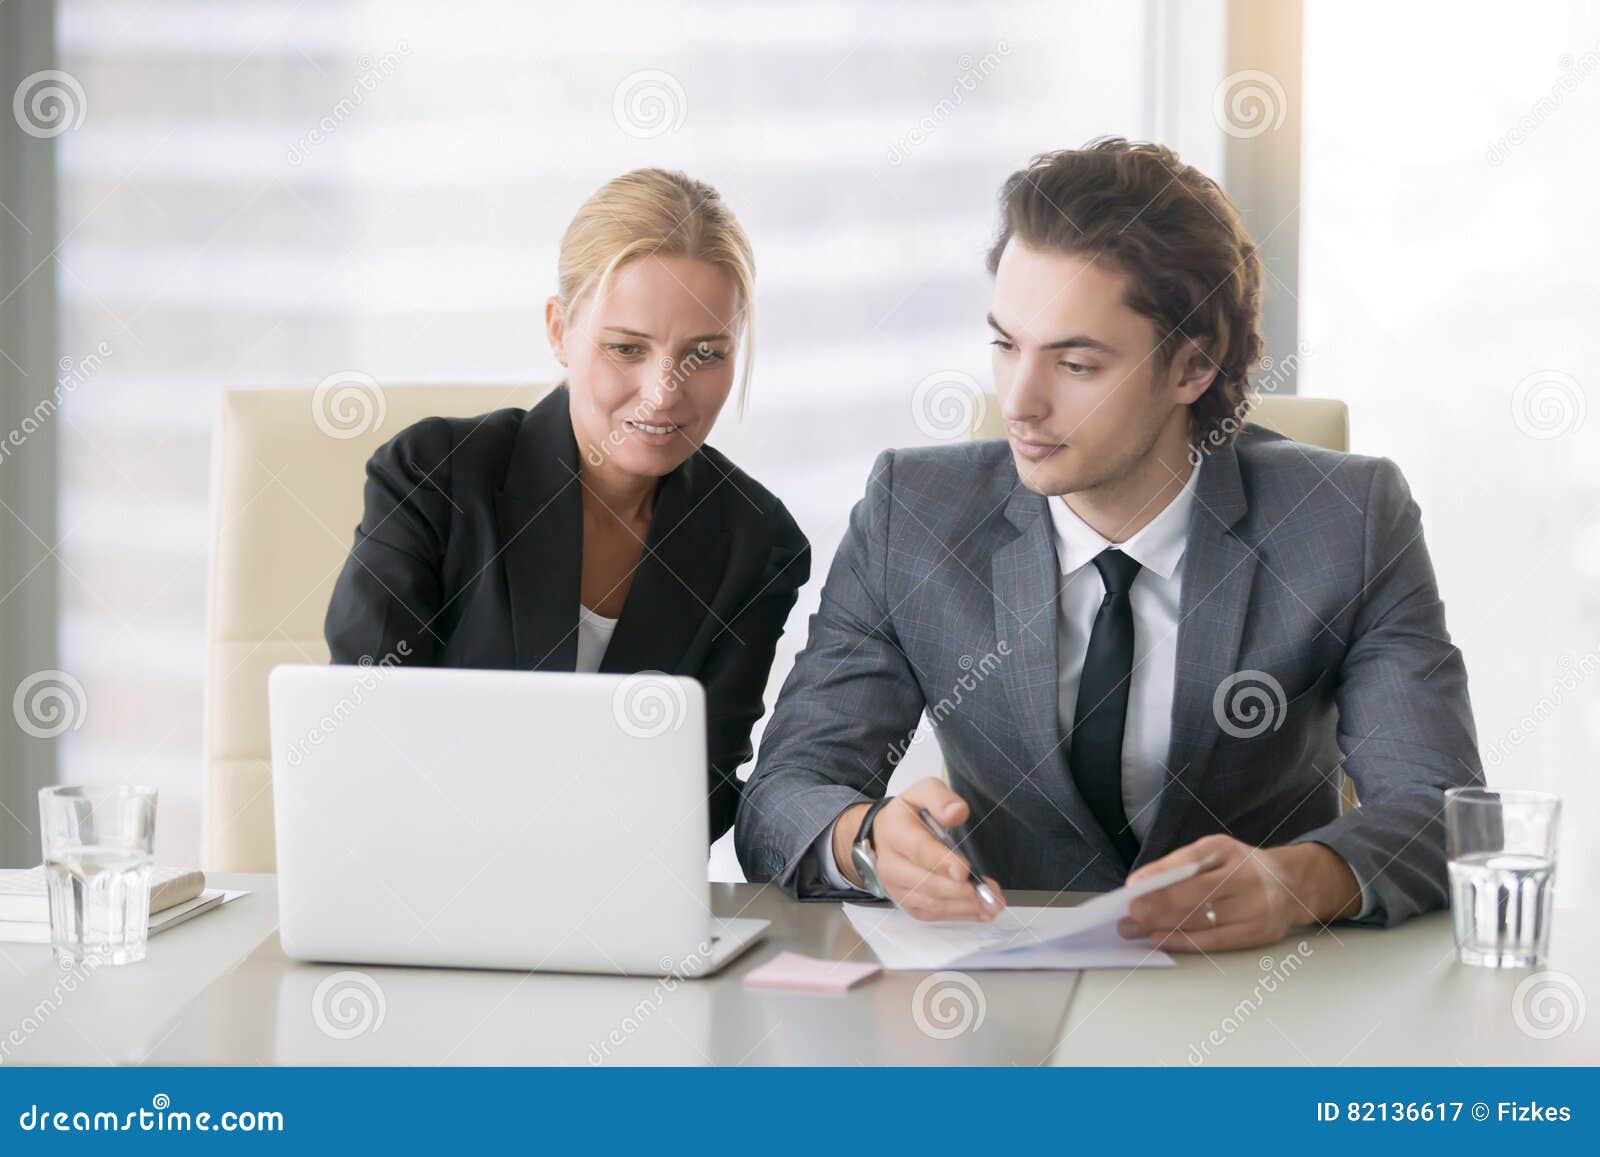 На работе втроем. Работа в офисе. Мужчина и женщина на собеседовании. 2 Бизнесмена фото. Костюм на собеседование мужчине.